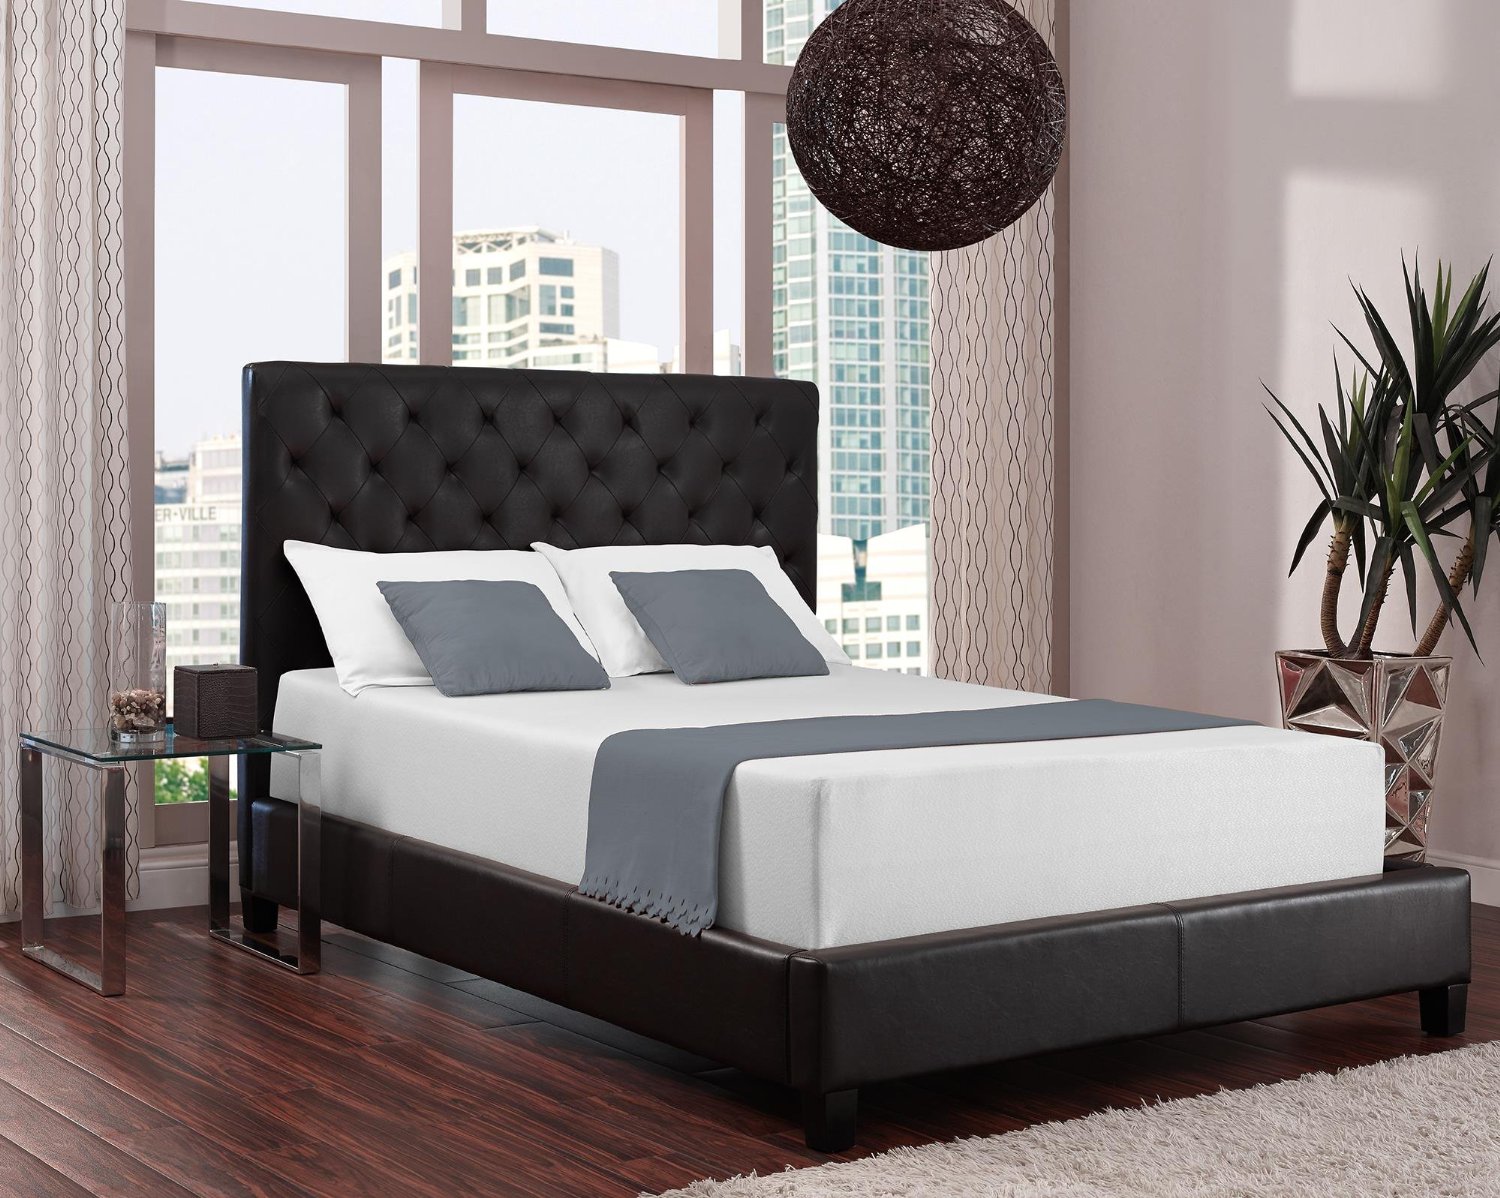 signature sleep 8 inch memory foam mattress reviews